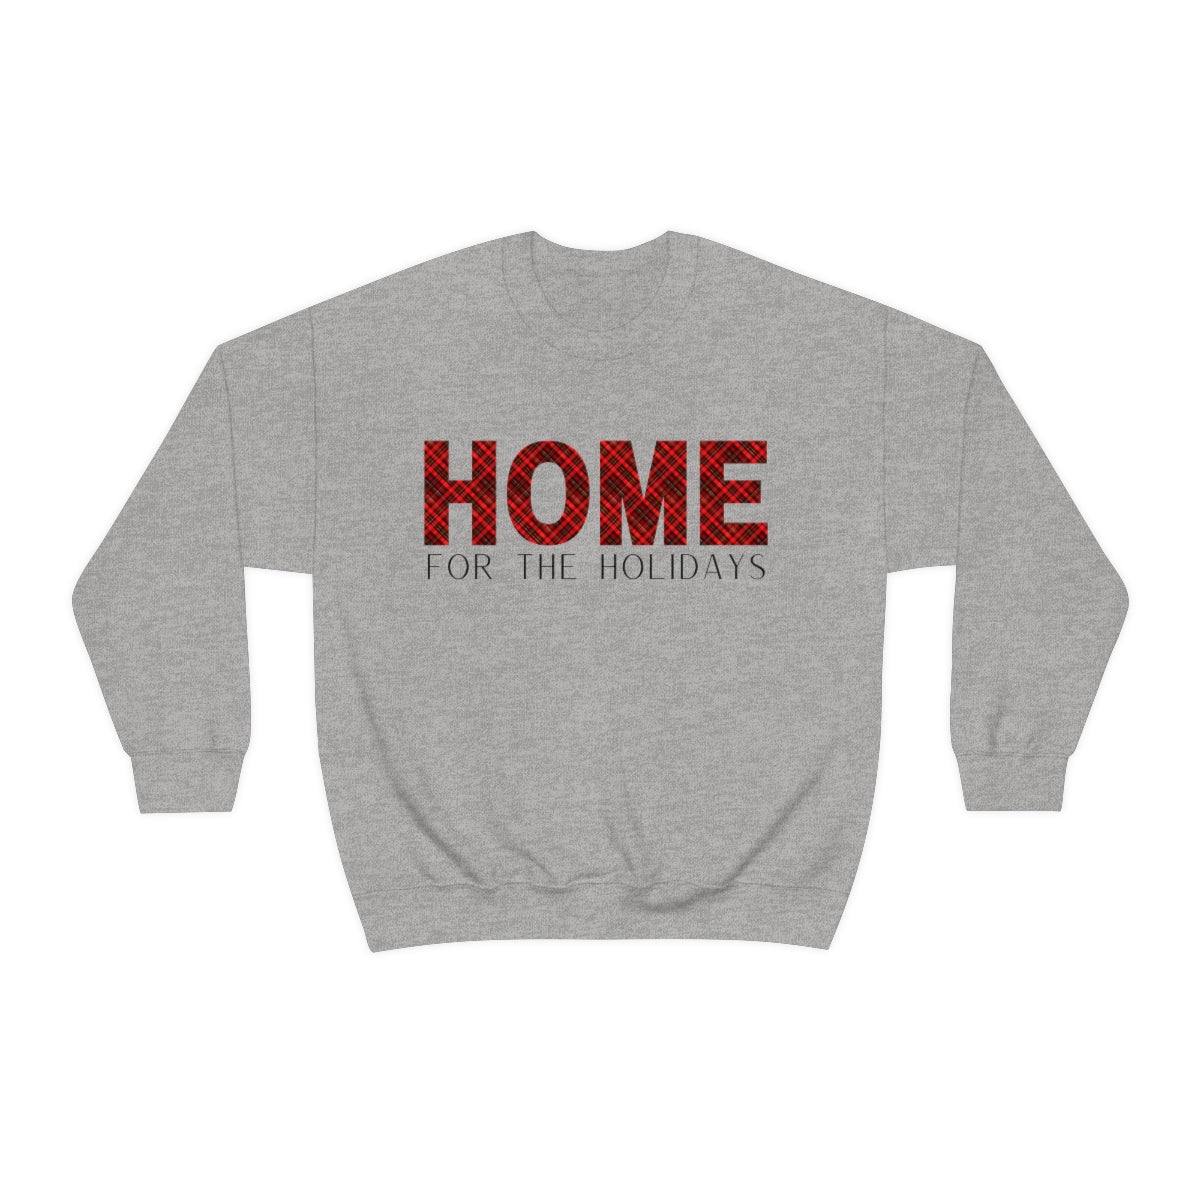 Home For the Holidays Christmas Sweatshirt, Plaid, Simple Text